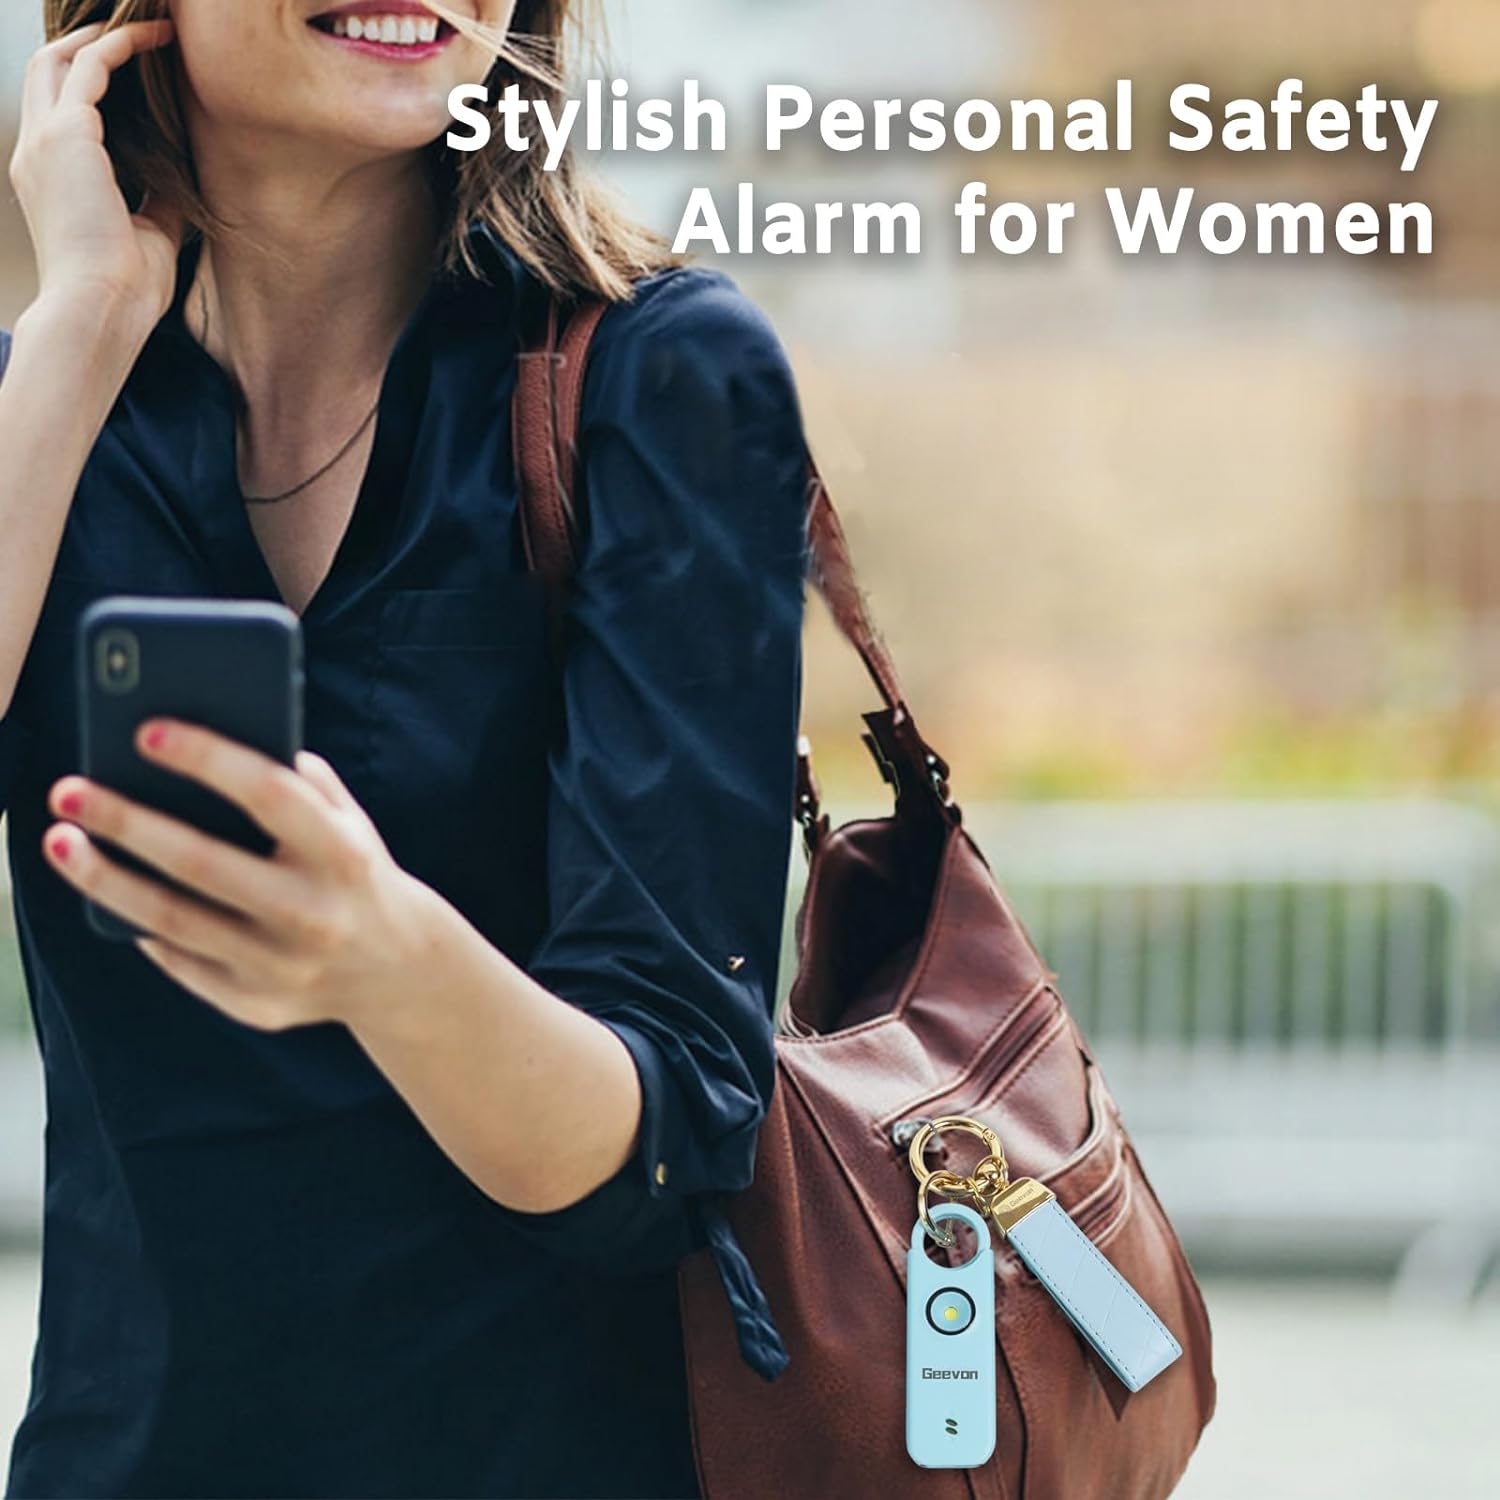 Geevon Rechargeable Personal Safety Alarm for Women, 130DB Loud Safe Sound Alarm Self Defense Siren with LED Strobe Light, Emergency Personal Alarm for Women, Men, Children, Elderly (Mint)